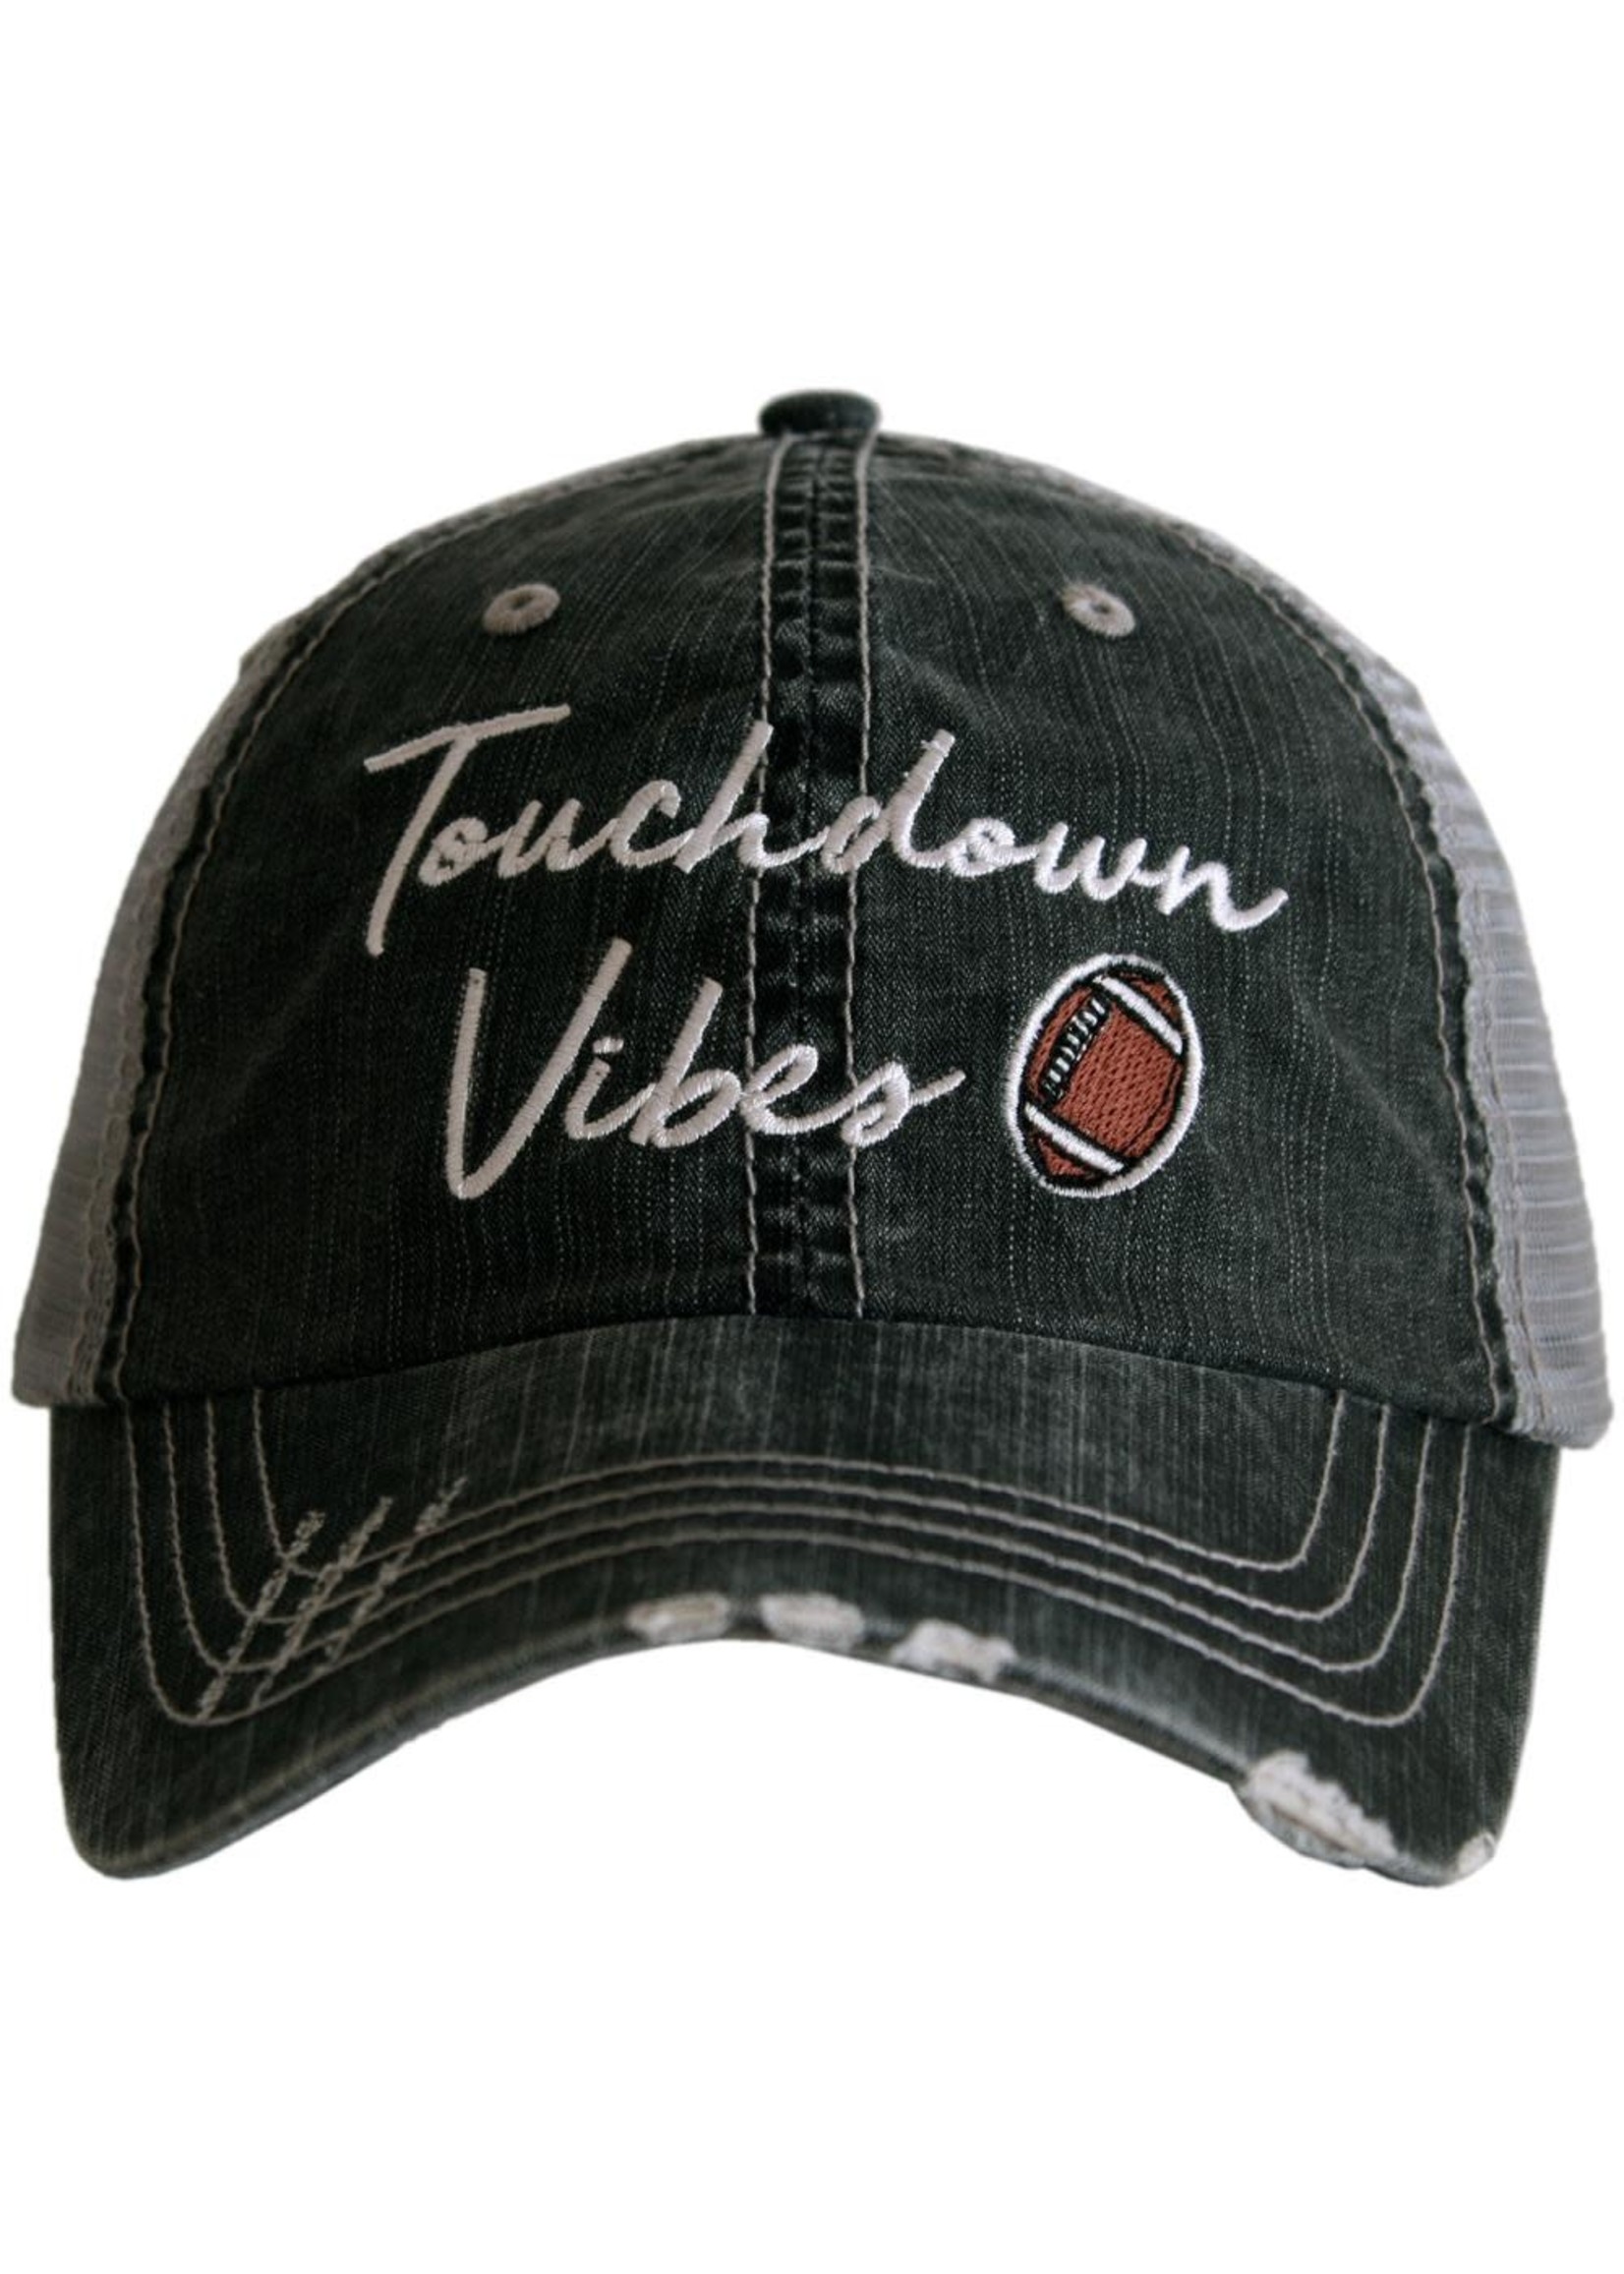 Katydid Touchdown Vibes Trucker Hat